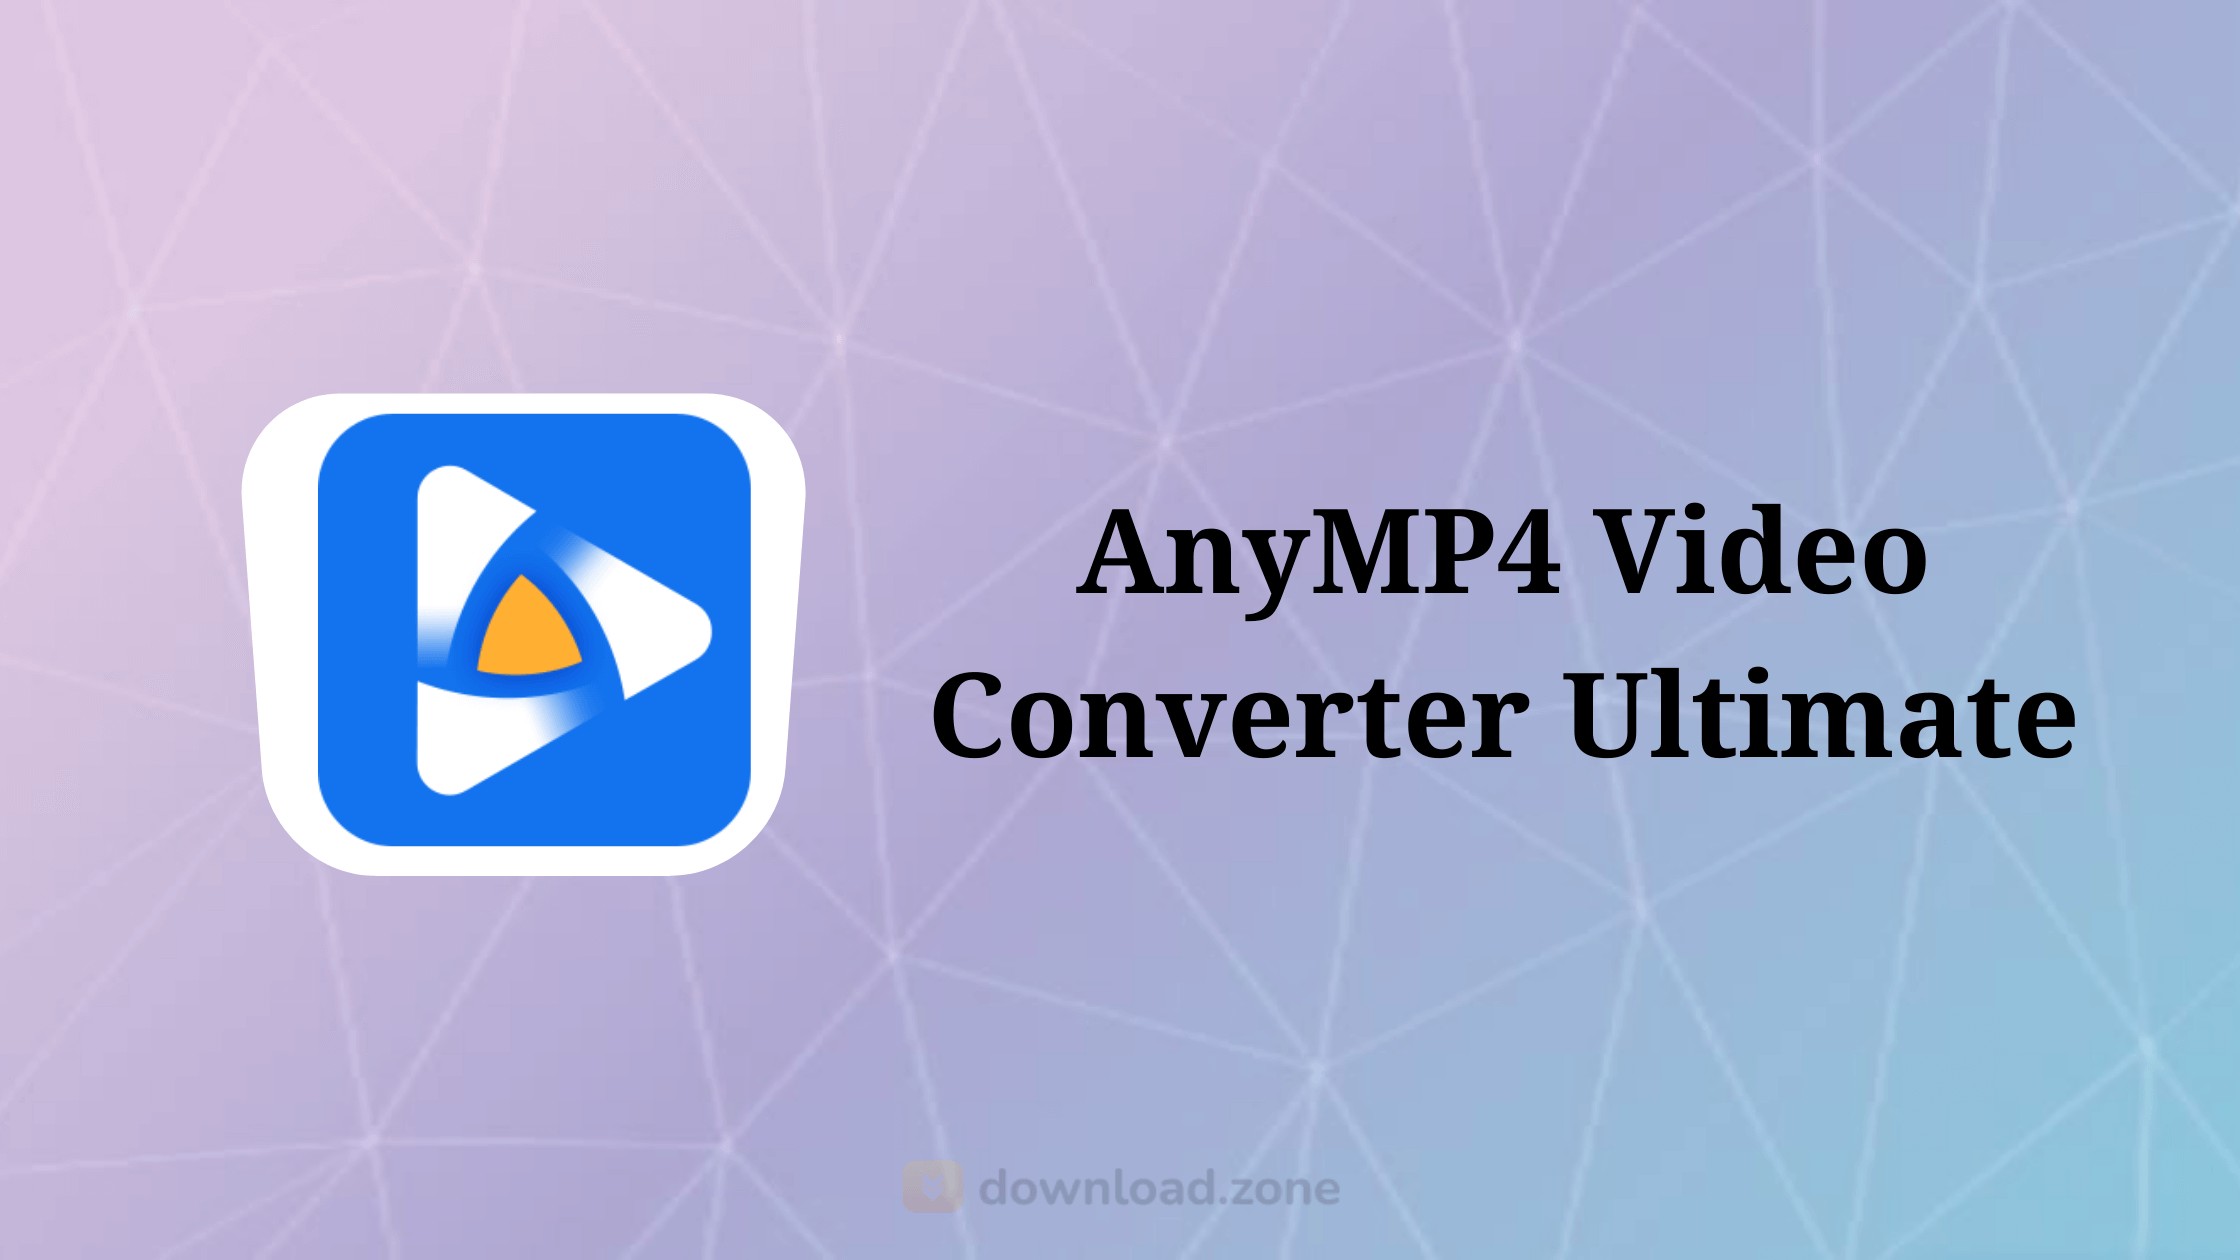 Download AnyMP4 Video Converter Ultimate Full Version